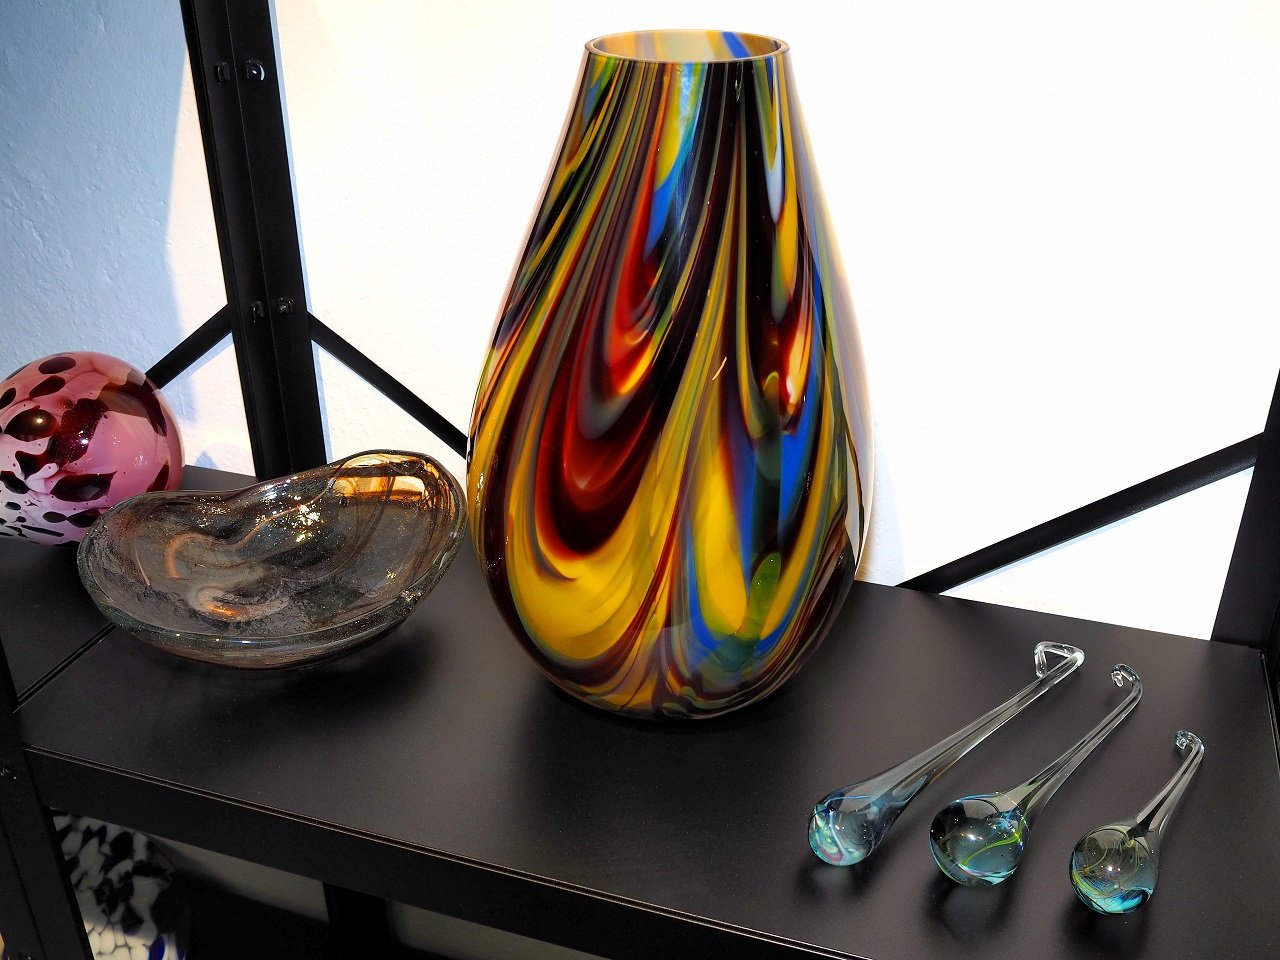 Mundgeblasene handgefertigte Glasunikate Glashütte Lamberts eröffnet Glasgalerie in Waldsassen Bilder Robert Christ